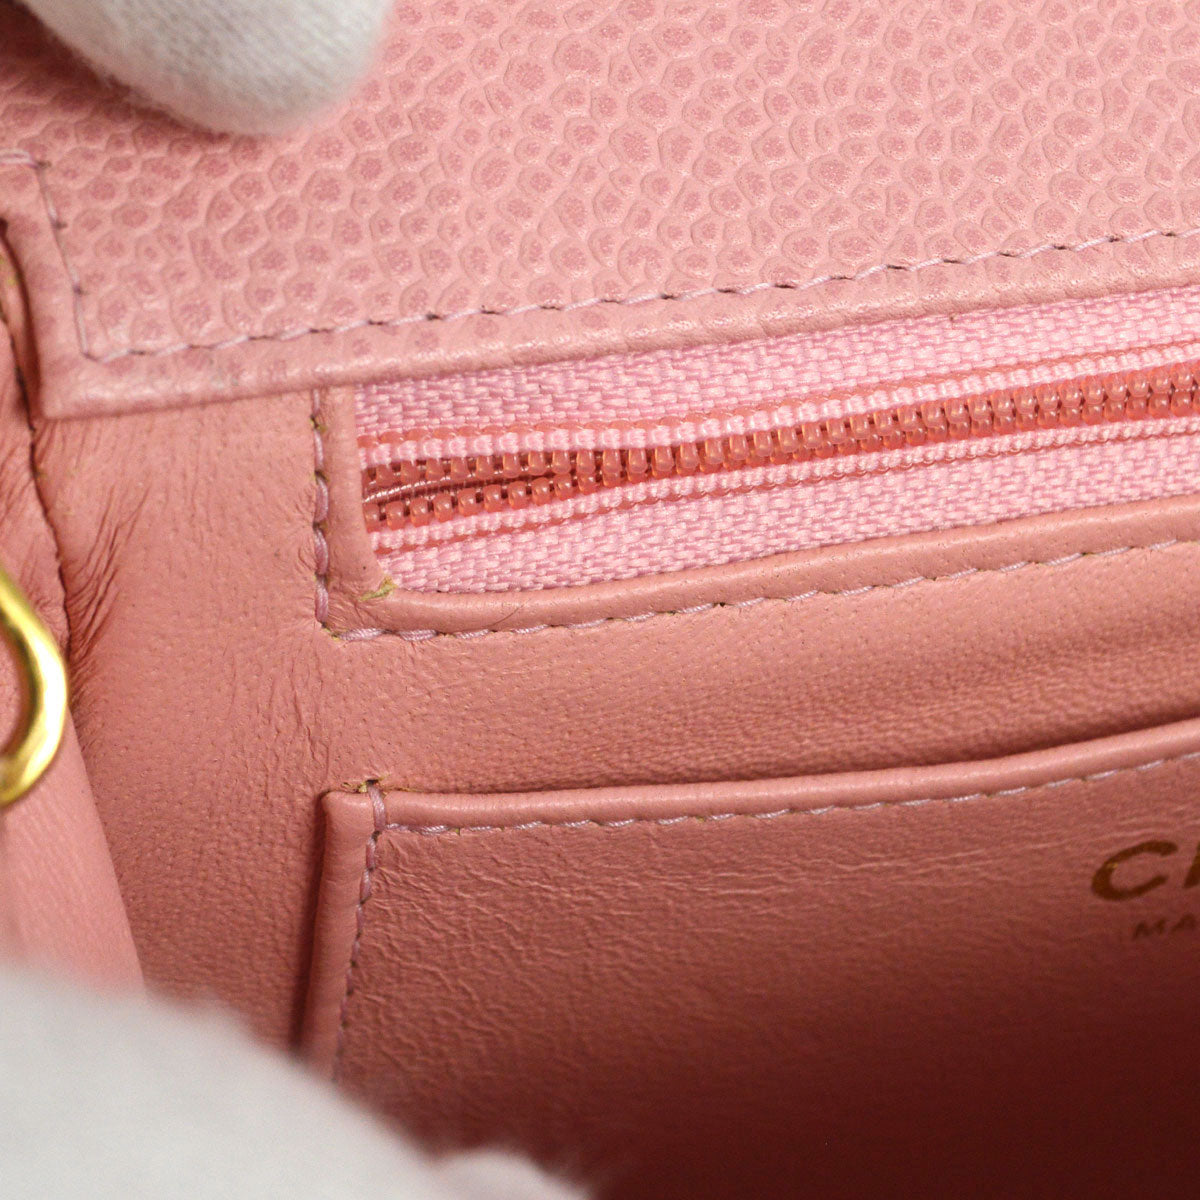 Chanel Pink Caviar Mini Square Flap Bag 17 76897